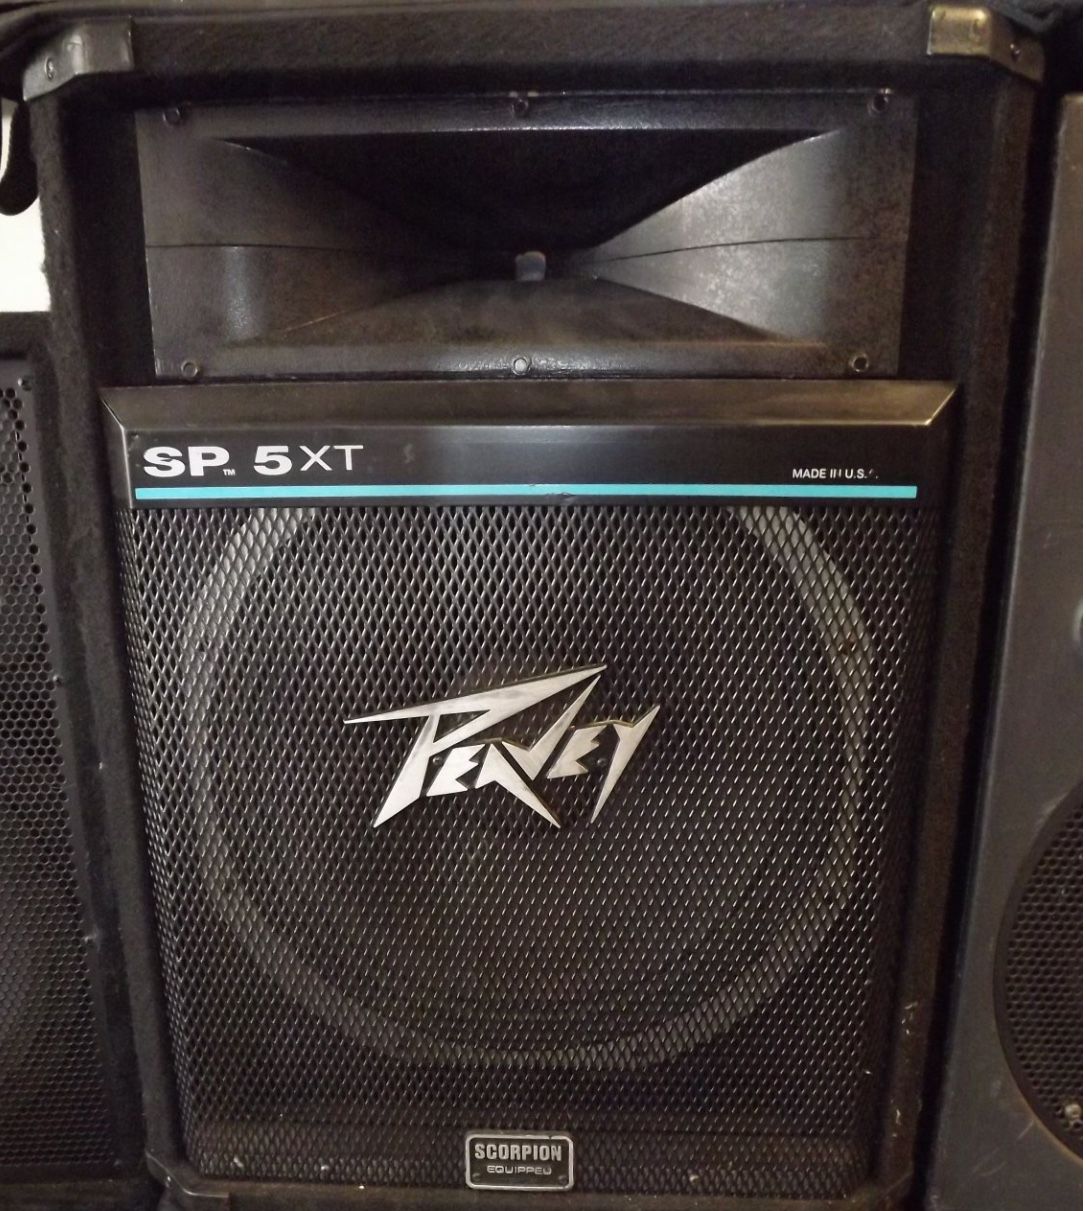 Peavey SP-5XT PA DJ Speaker With Scorpion 15”